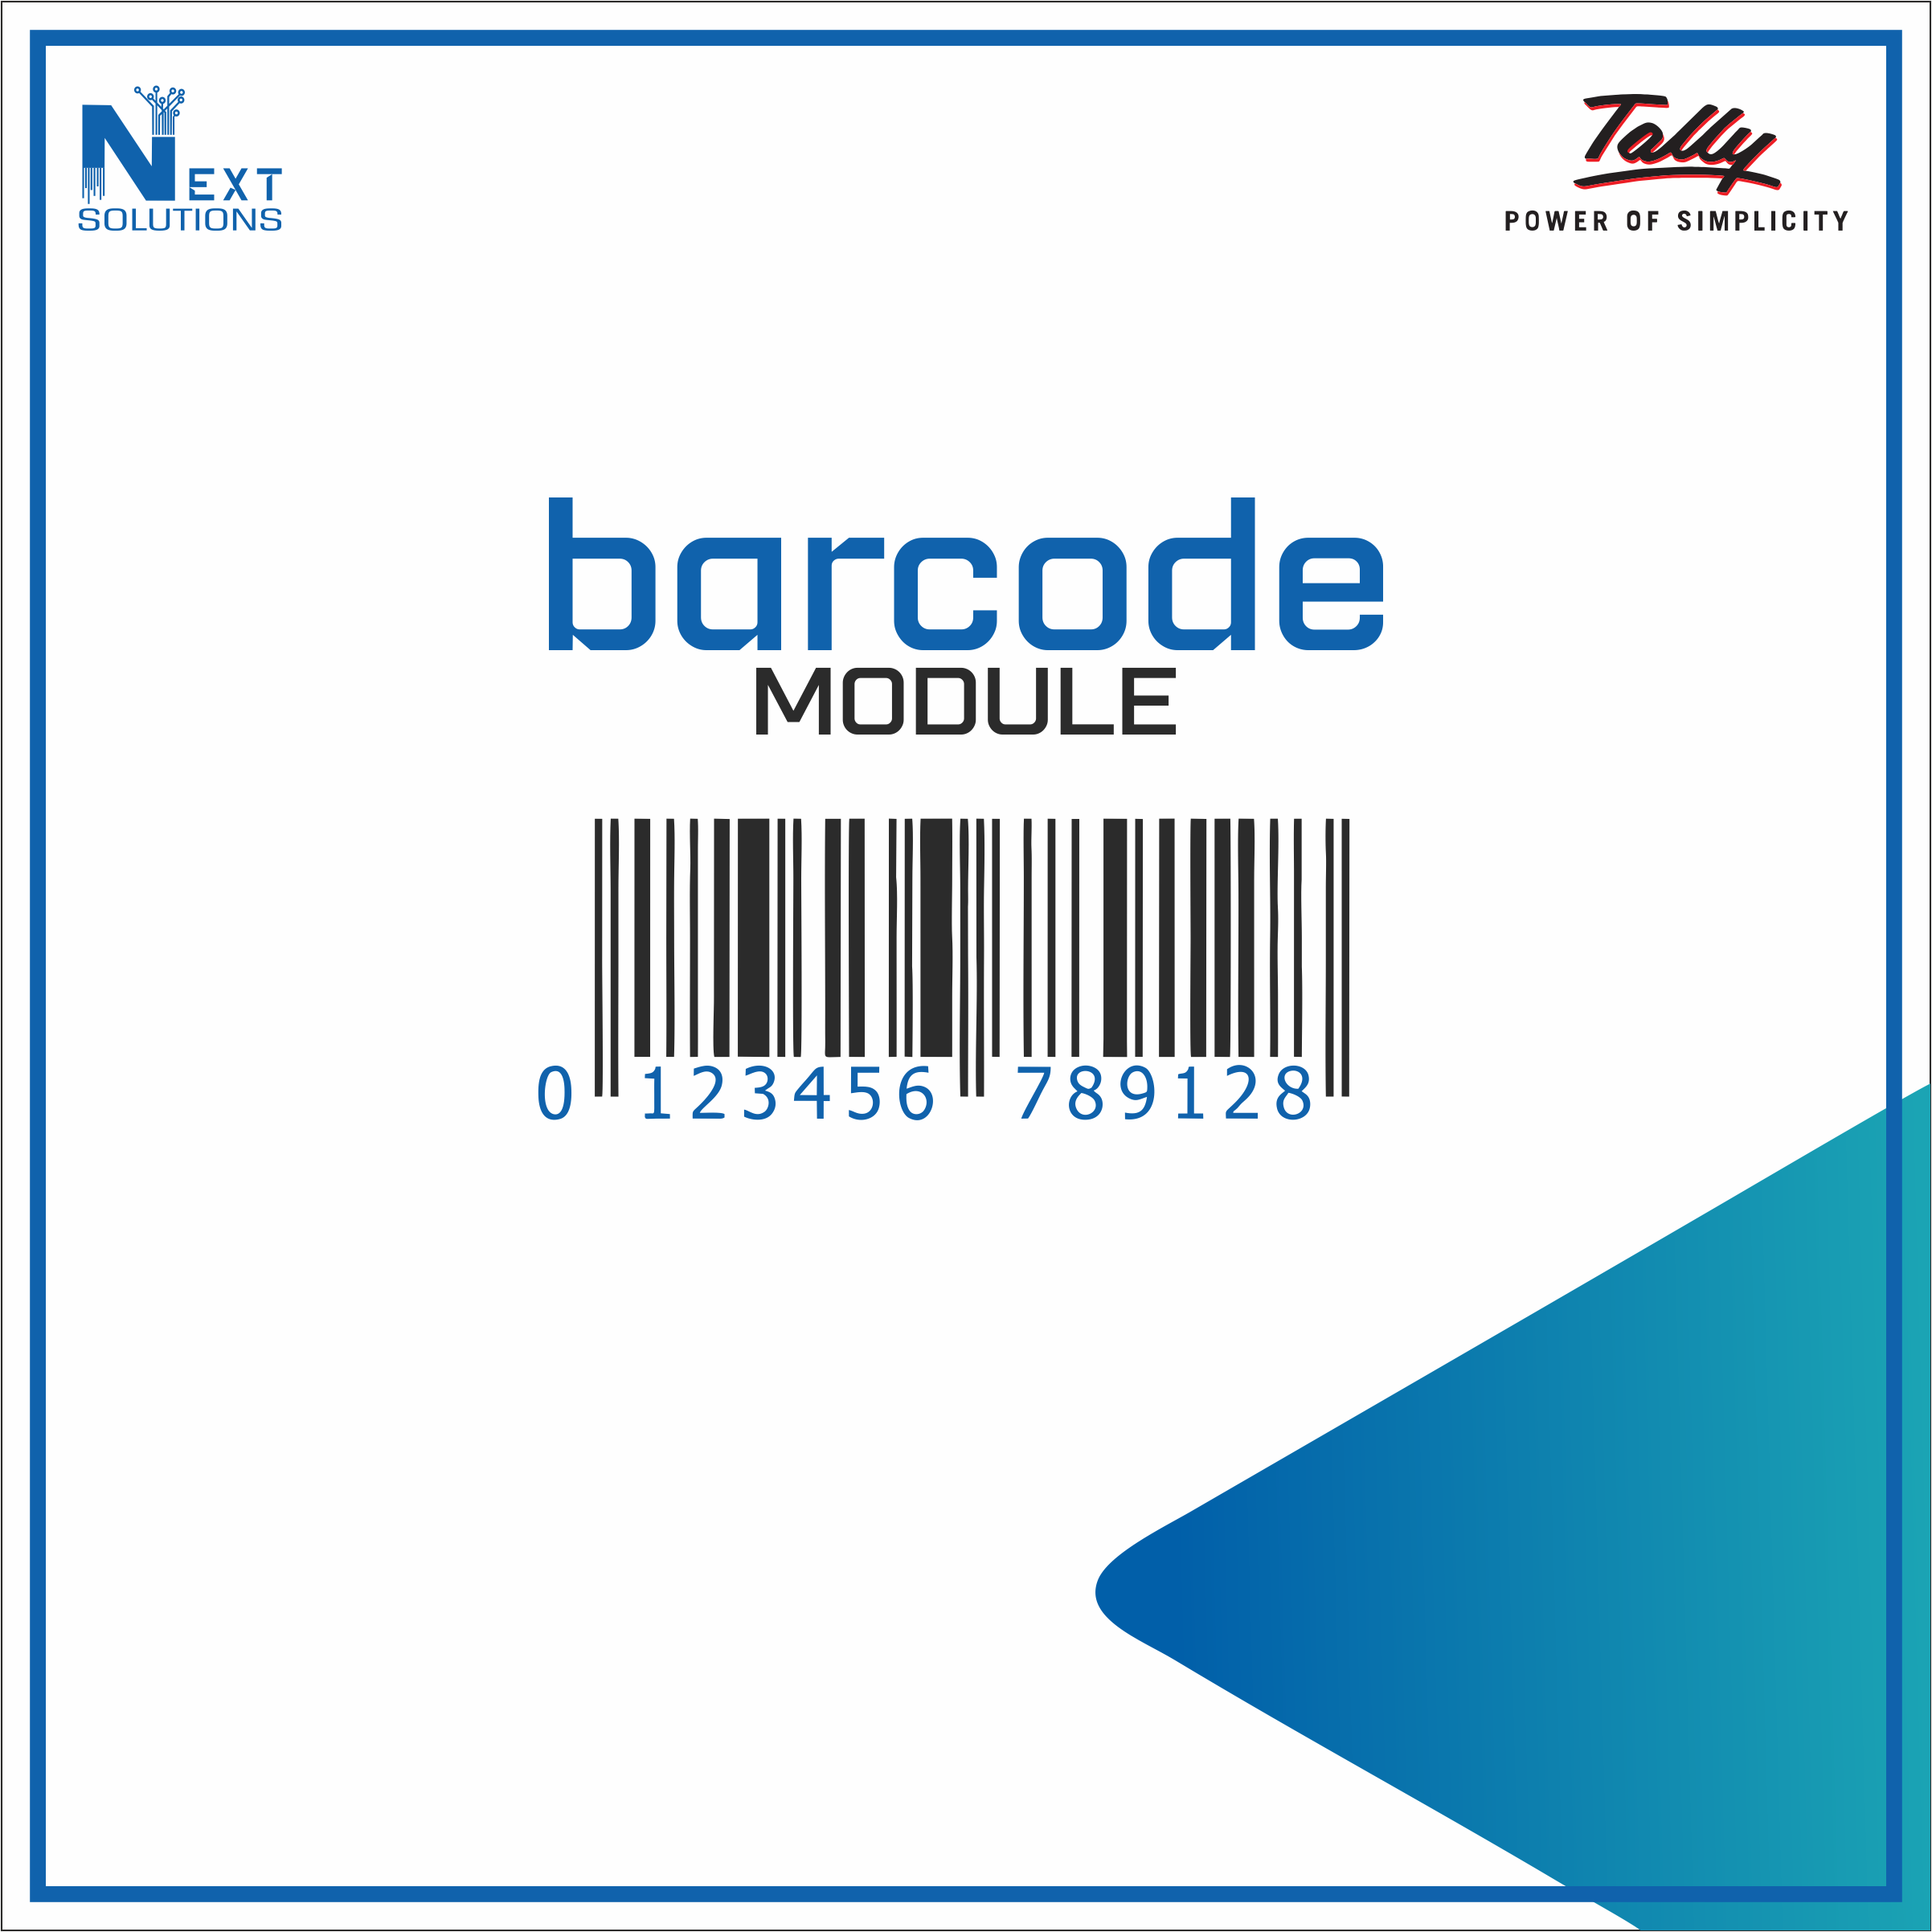 barcode in tally erp 9